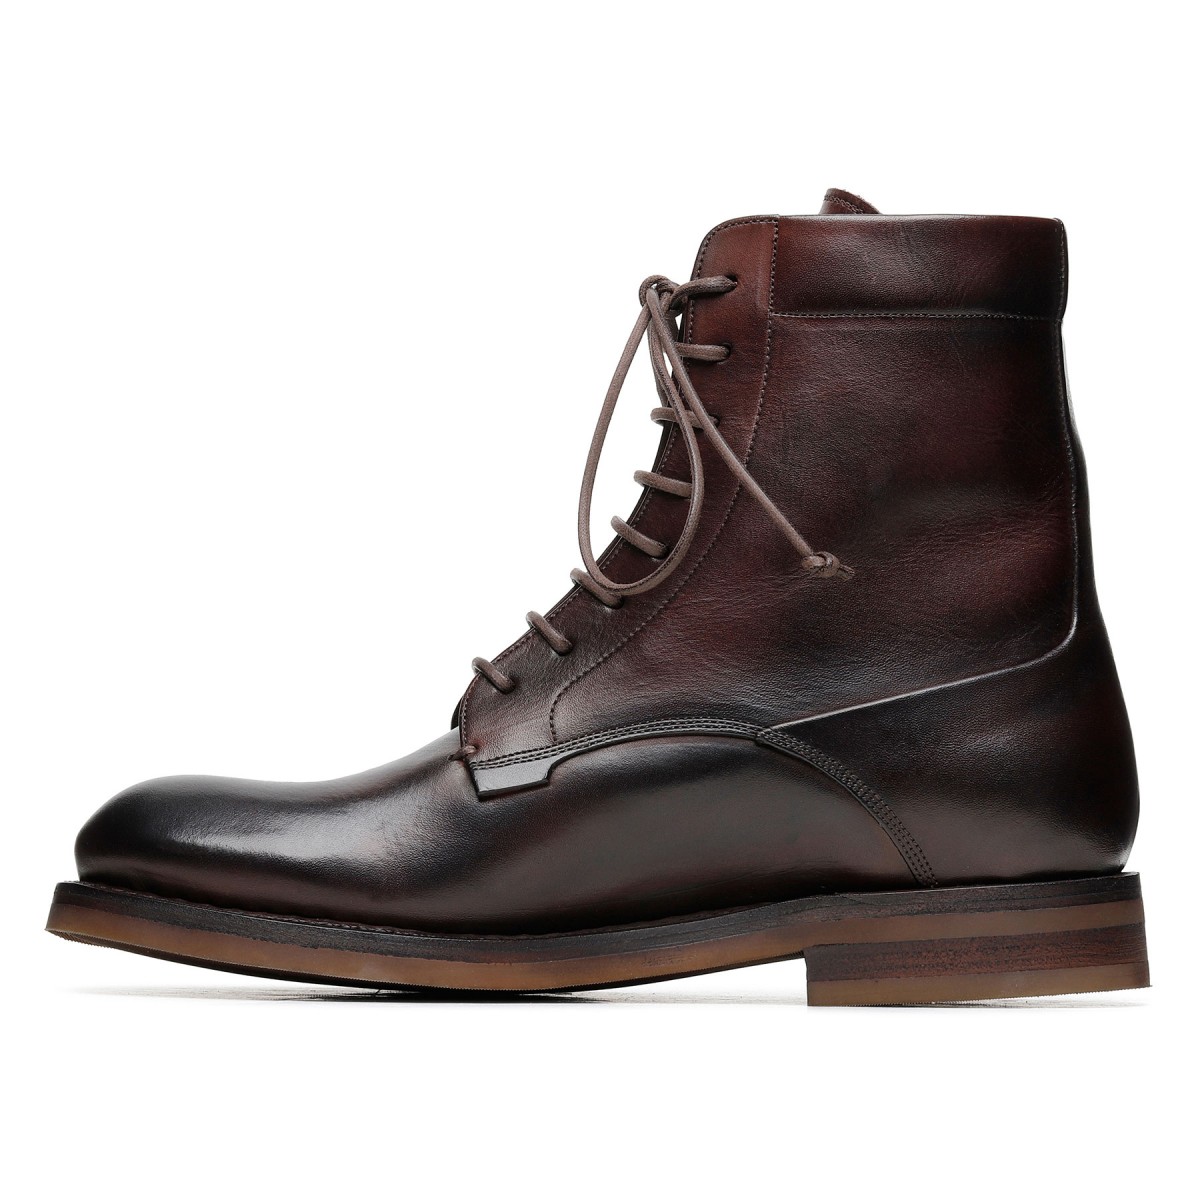 Courmayeur dark brown leather booties